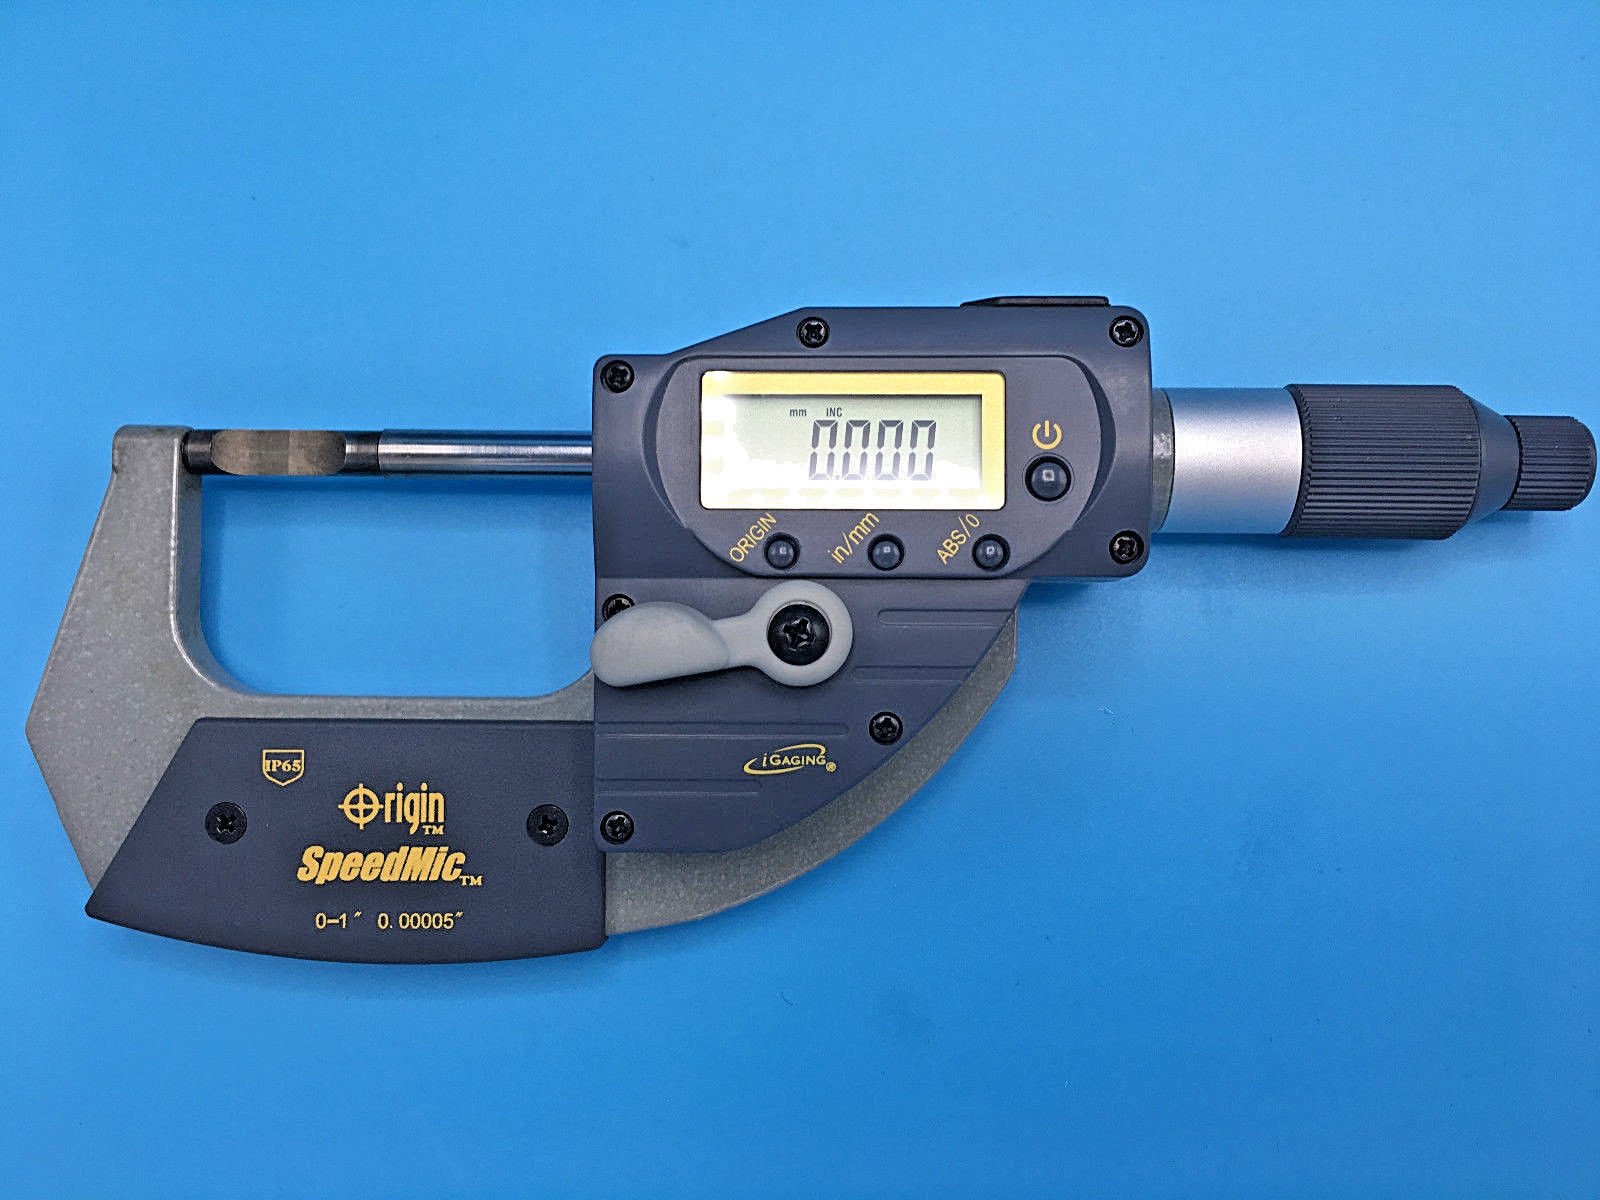 iGAGING 35-070-B02 Blade Micrometer Digital Quick Absolute Origin SpeedMic 1-2"